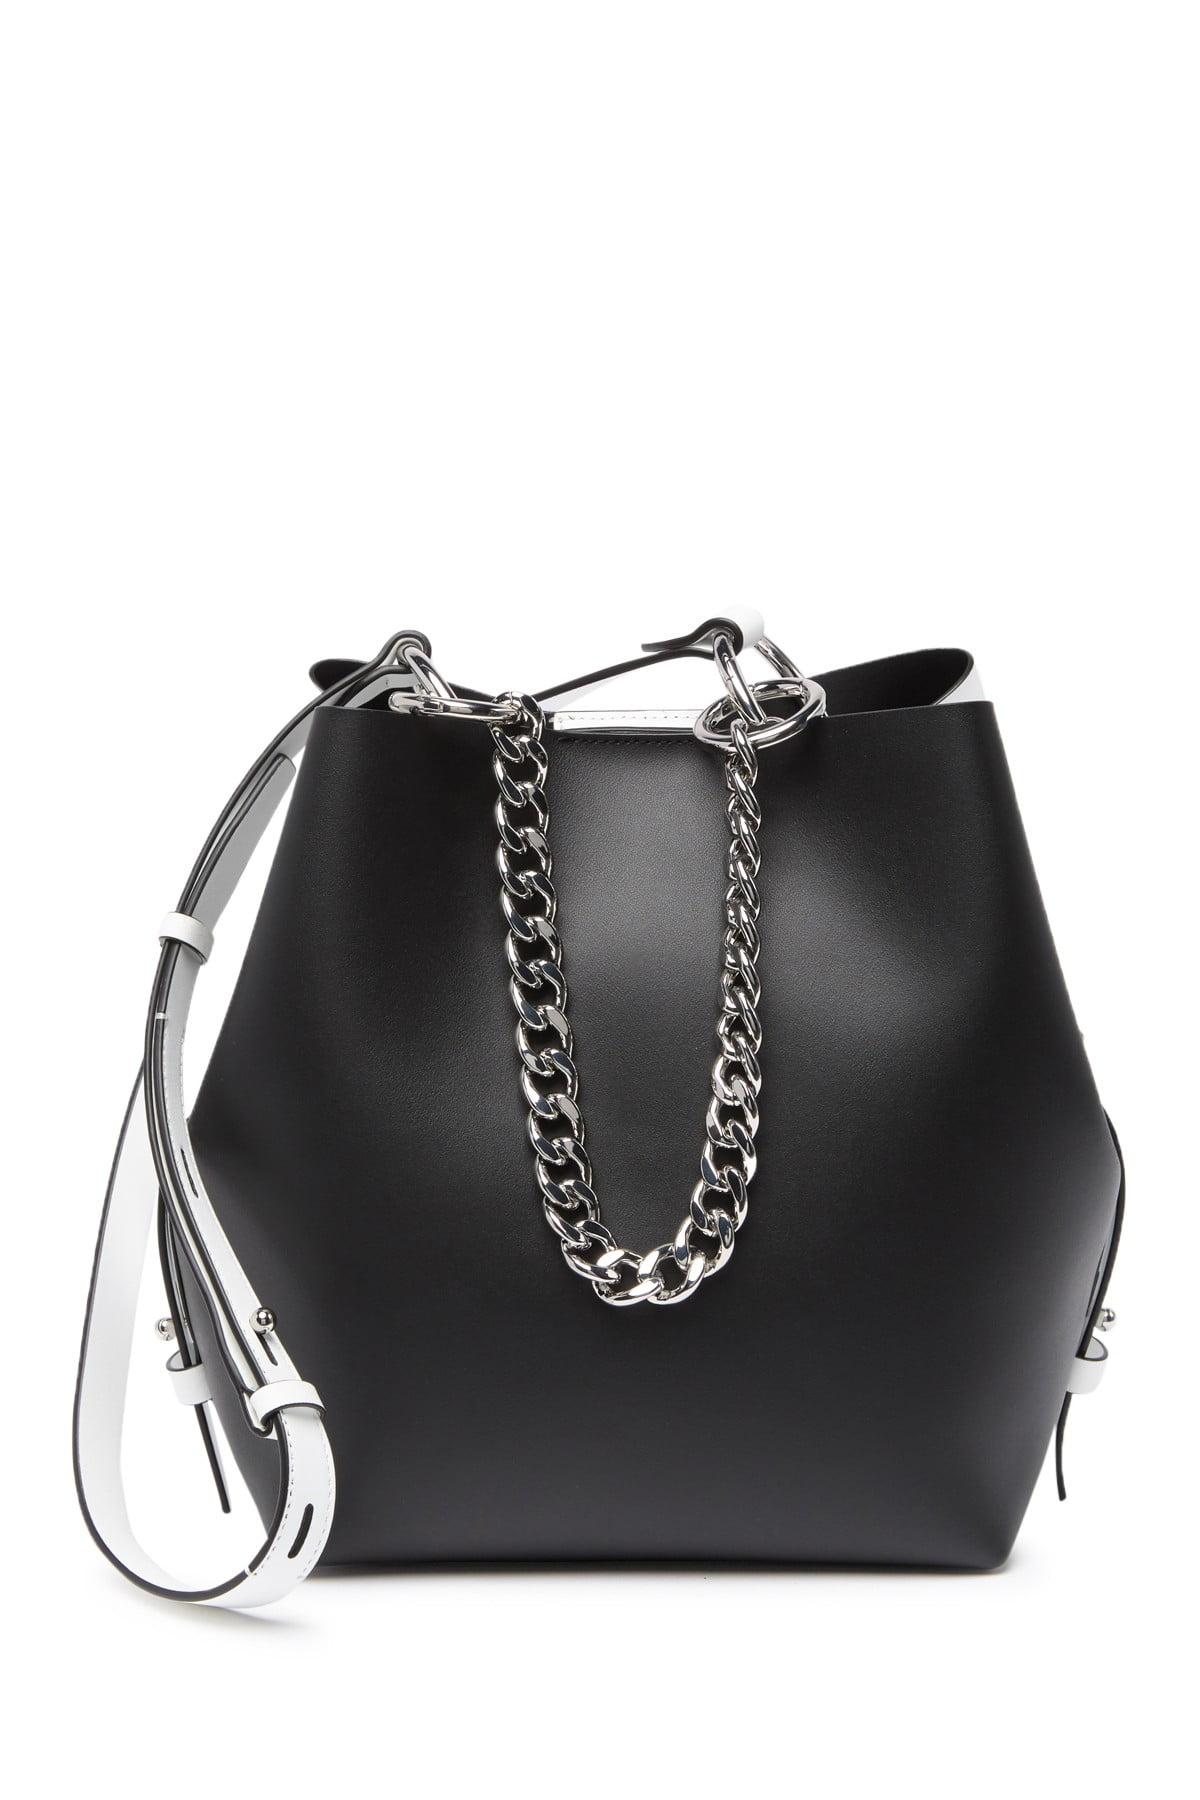 Rebecca Minkoff Kate Medium Convertible Bucket Bag in Black | Lyst